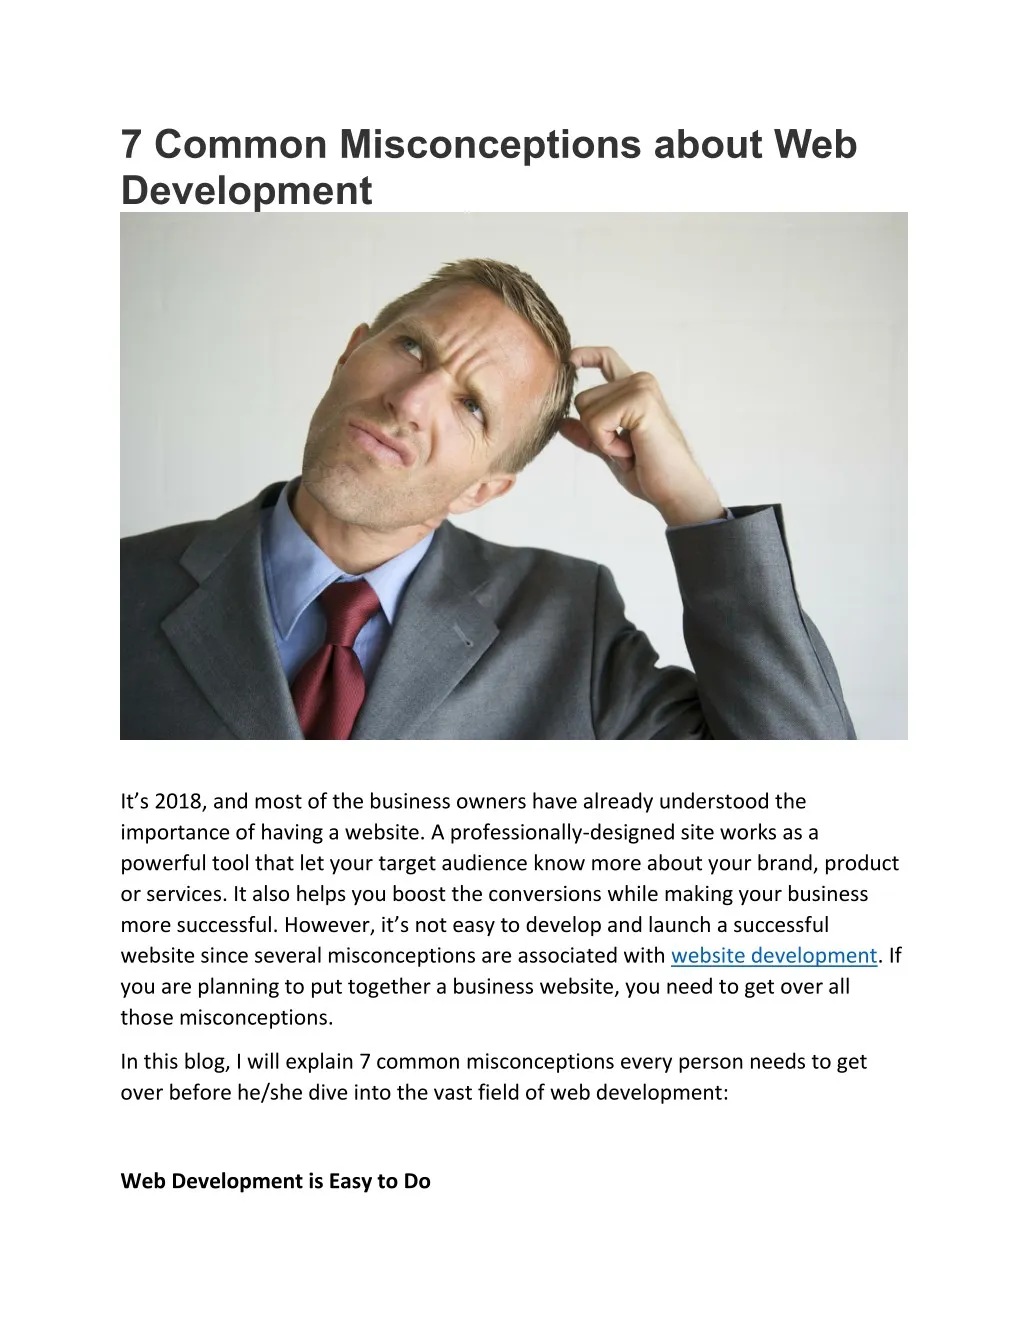 7 common misconceptions about web development